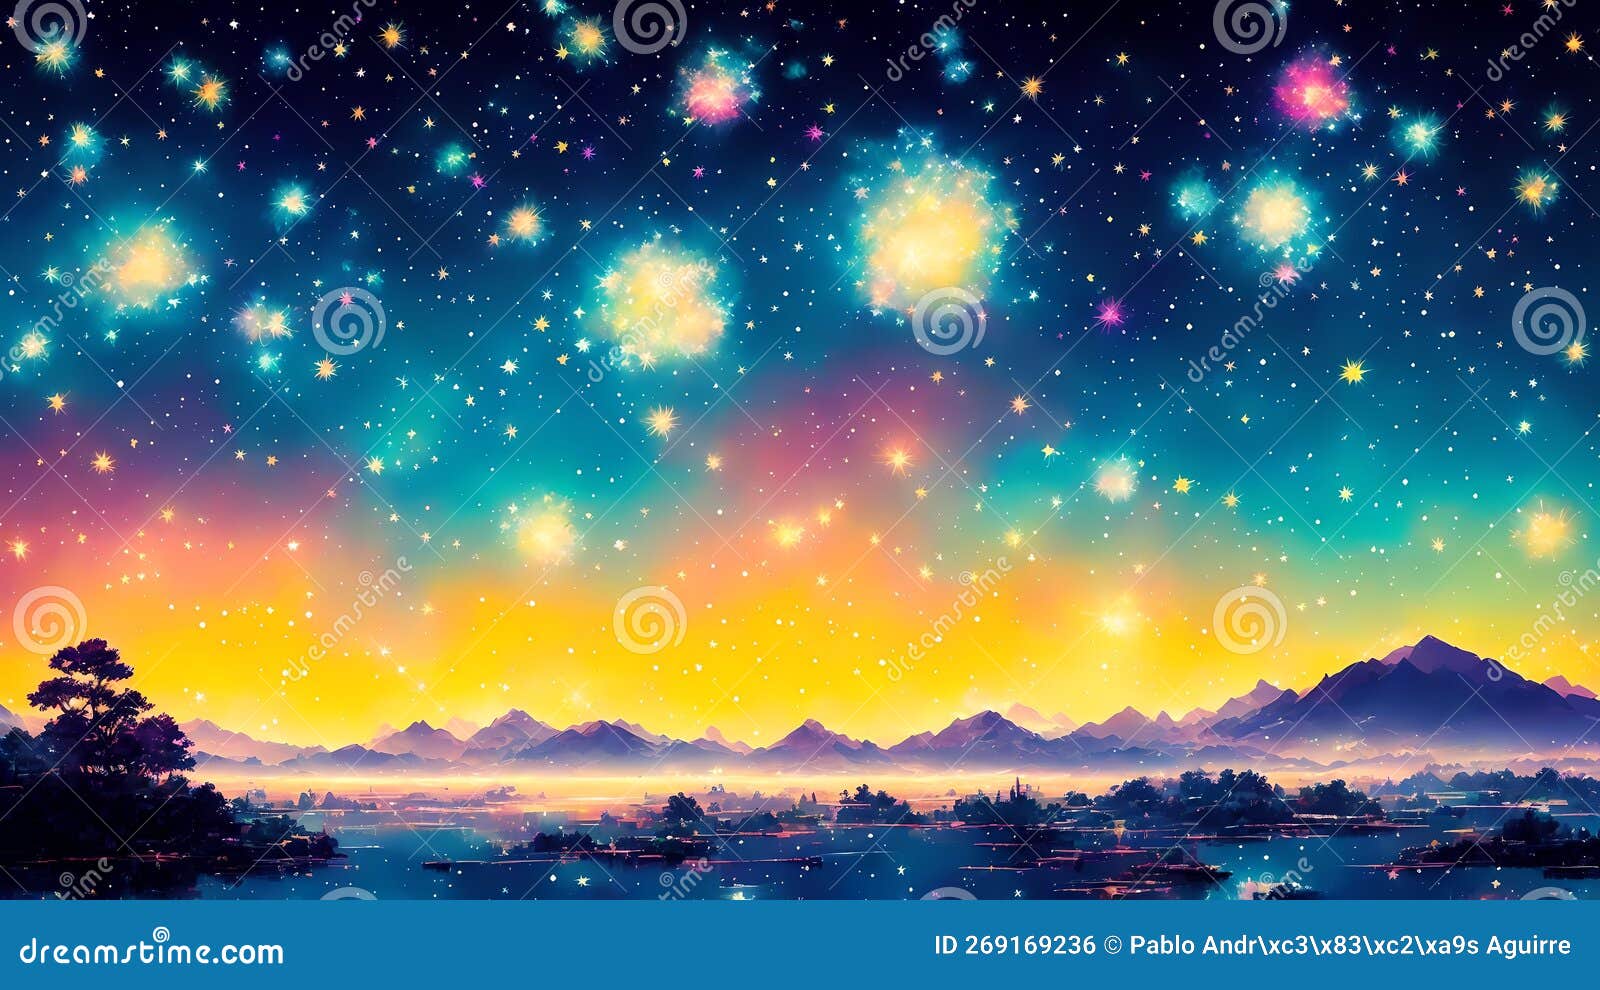 HD desktop wallpaper: Anime, Stars, Night, Tree, Galaxy, Comet, Original,  Scenery download free picture #863540